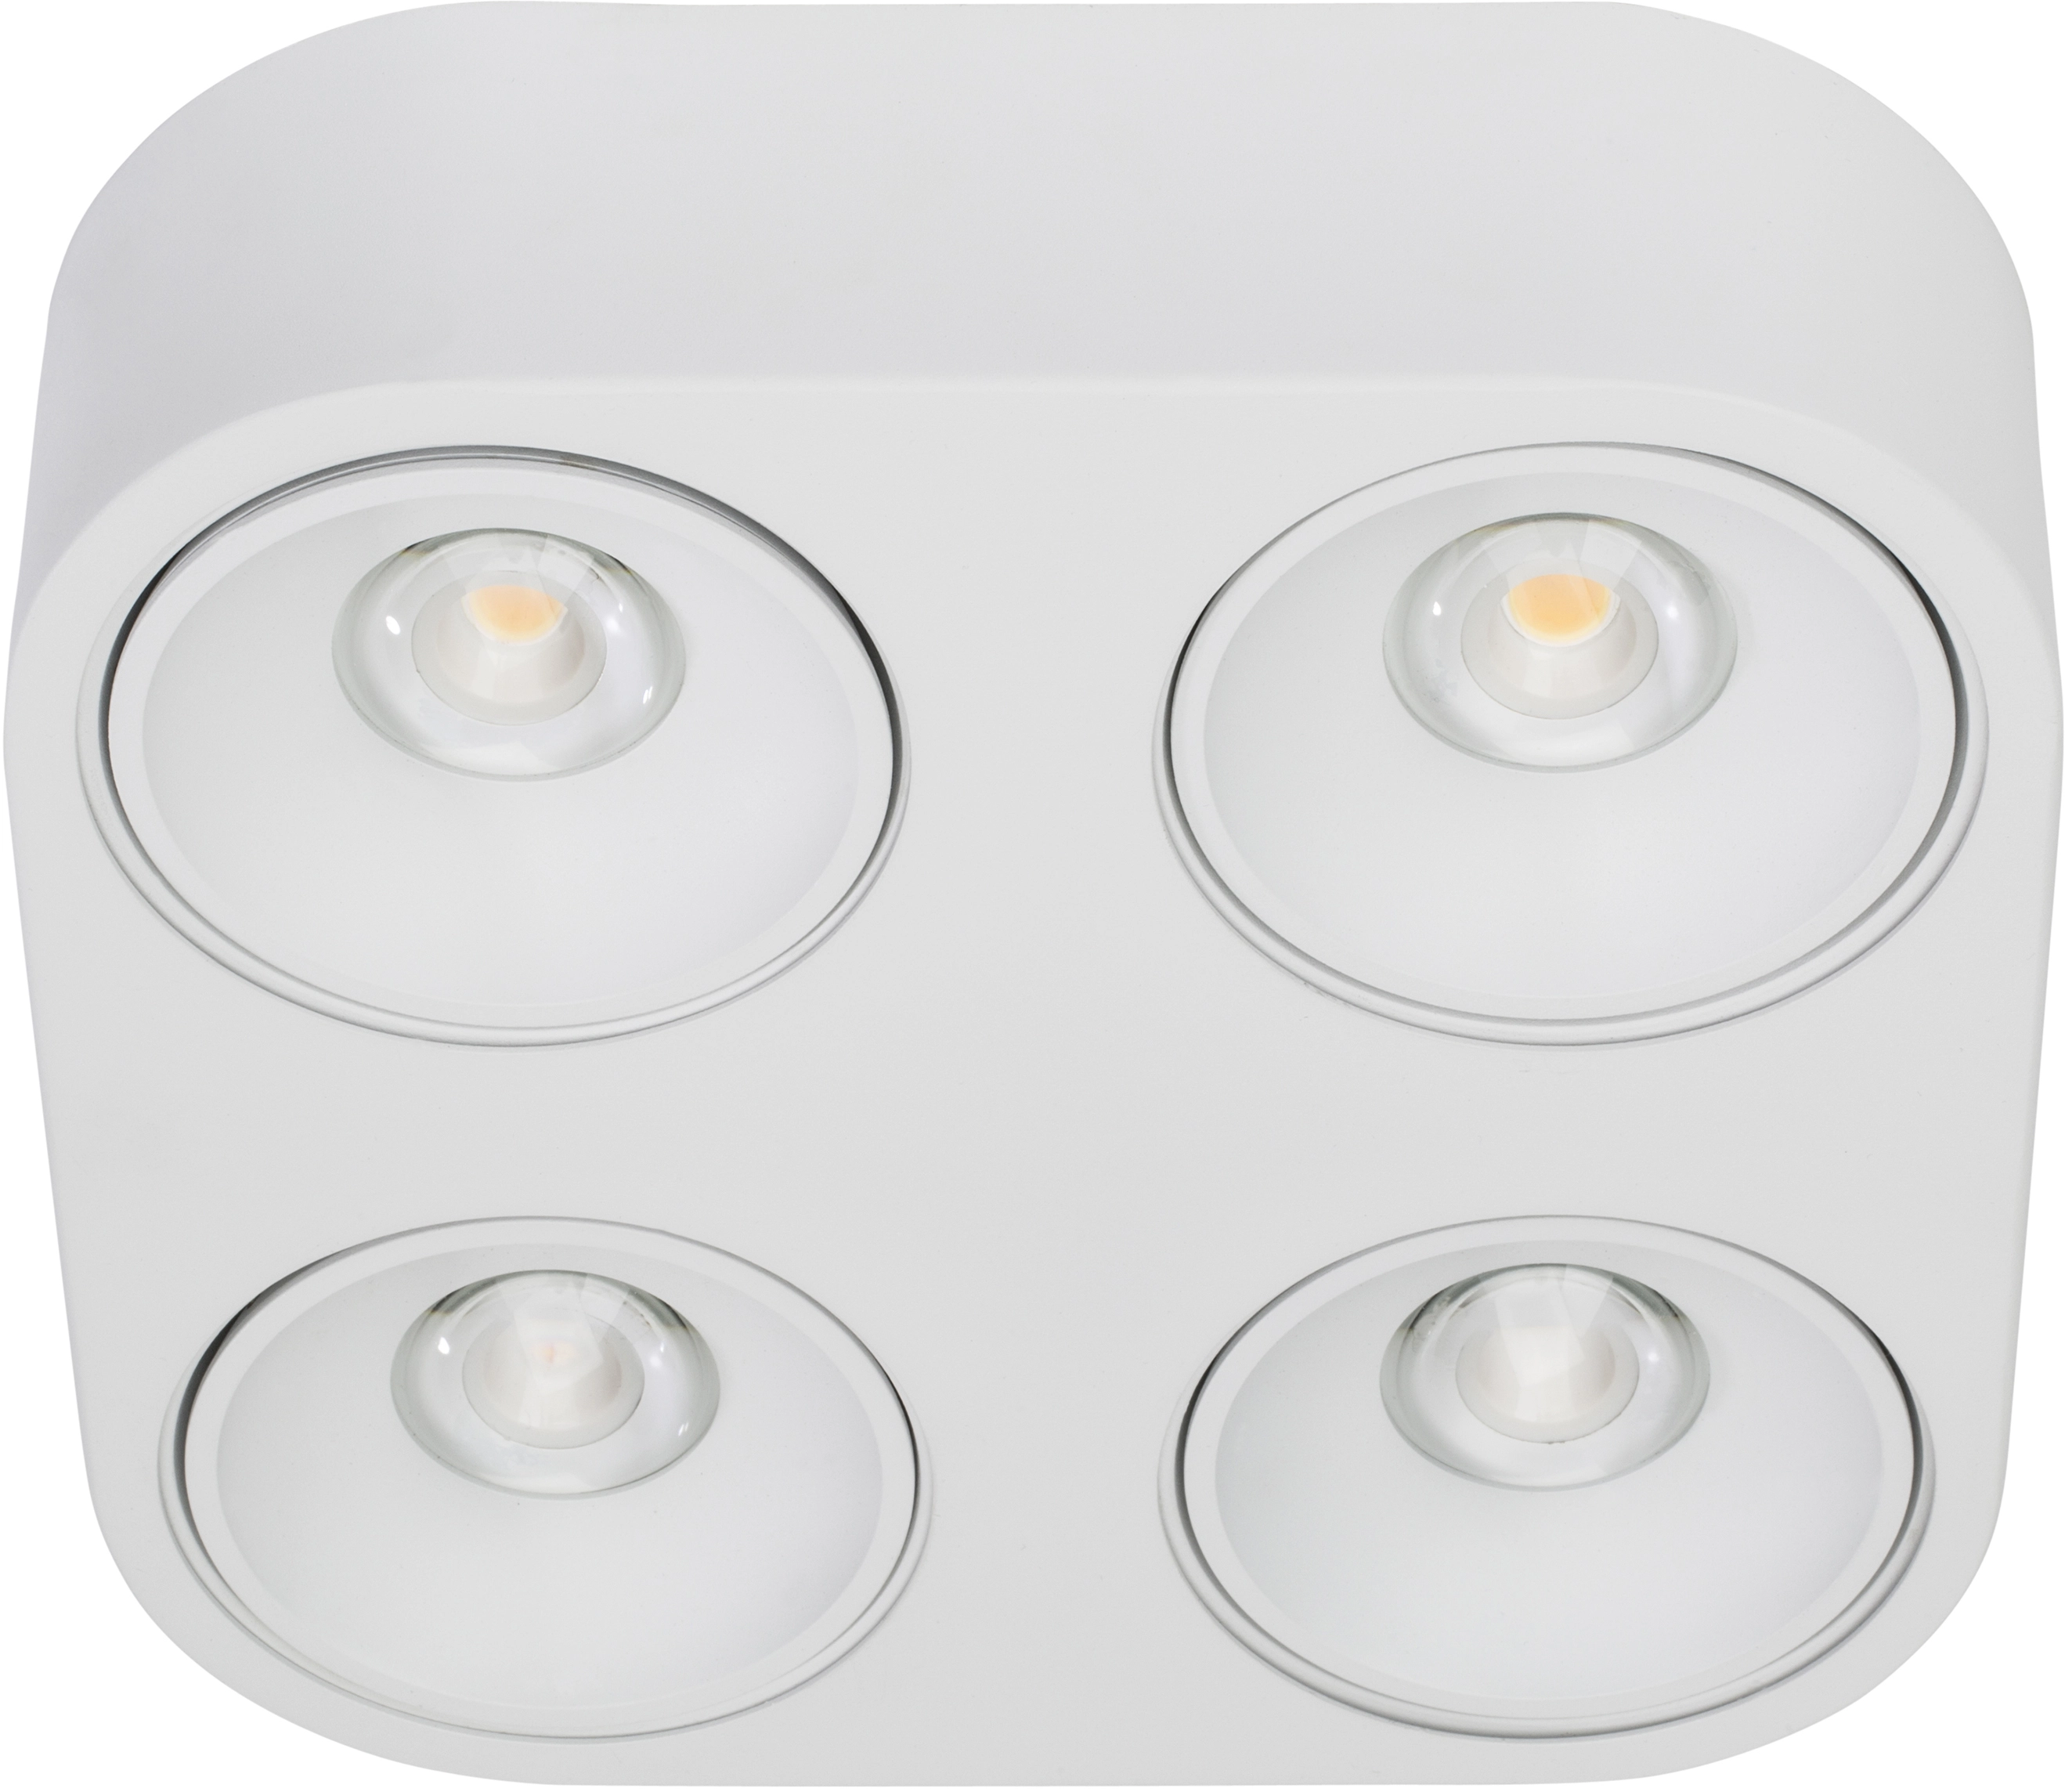 AEG LED-Spot Leca dimmbar und x 26,3 26,3 kaufen bei x cm OBI 7 cm cm schwenkbar